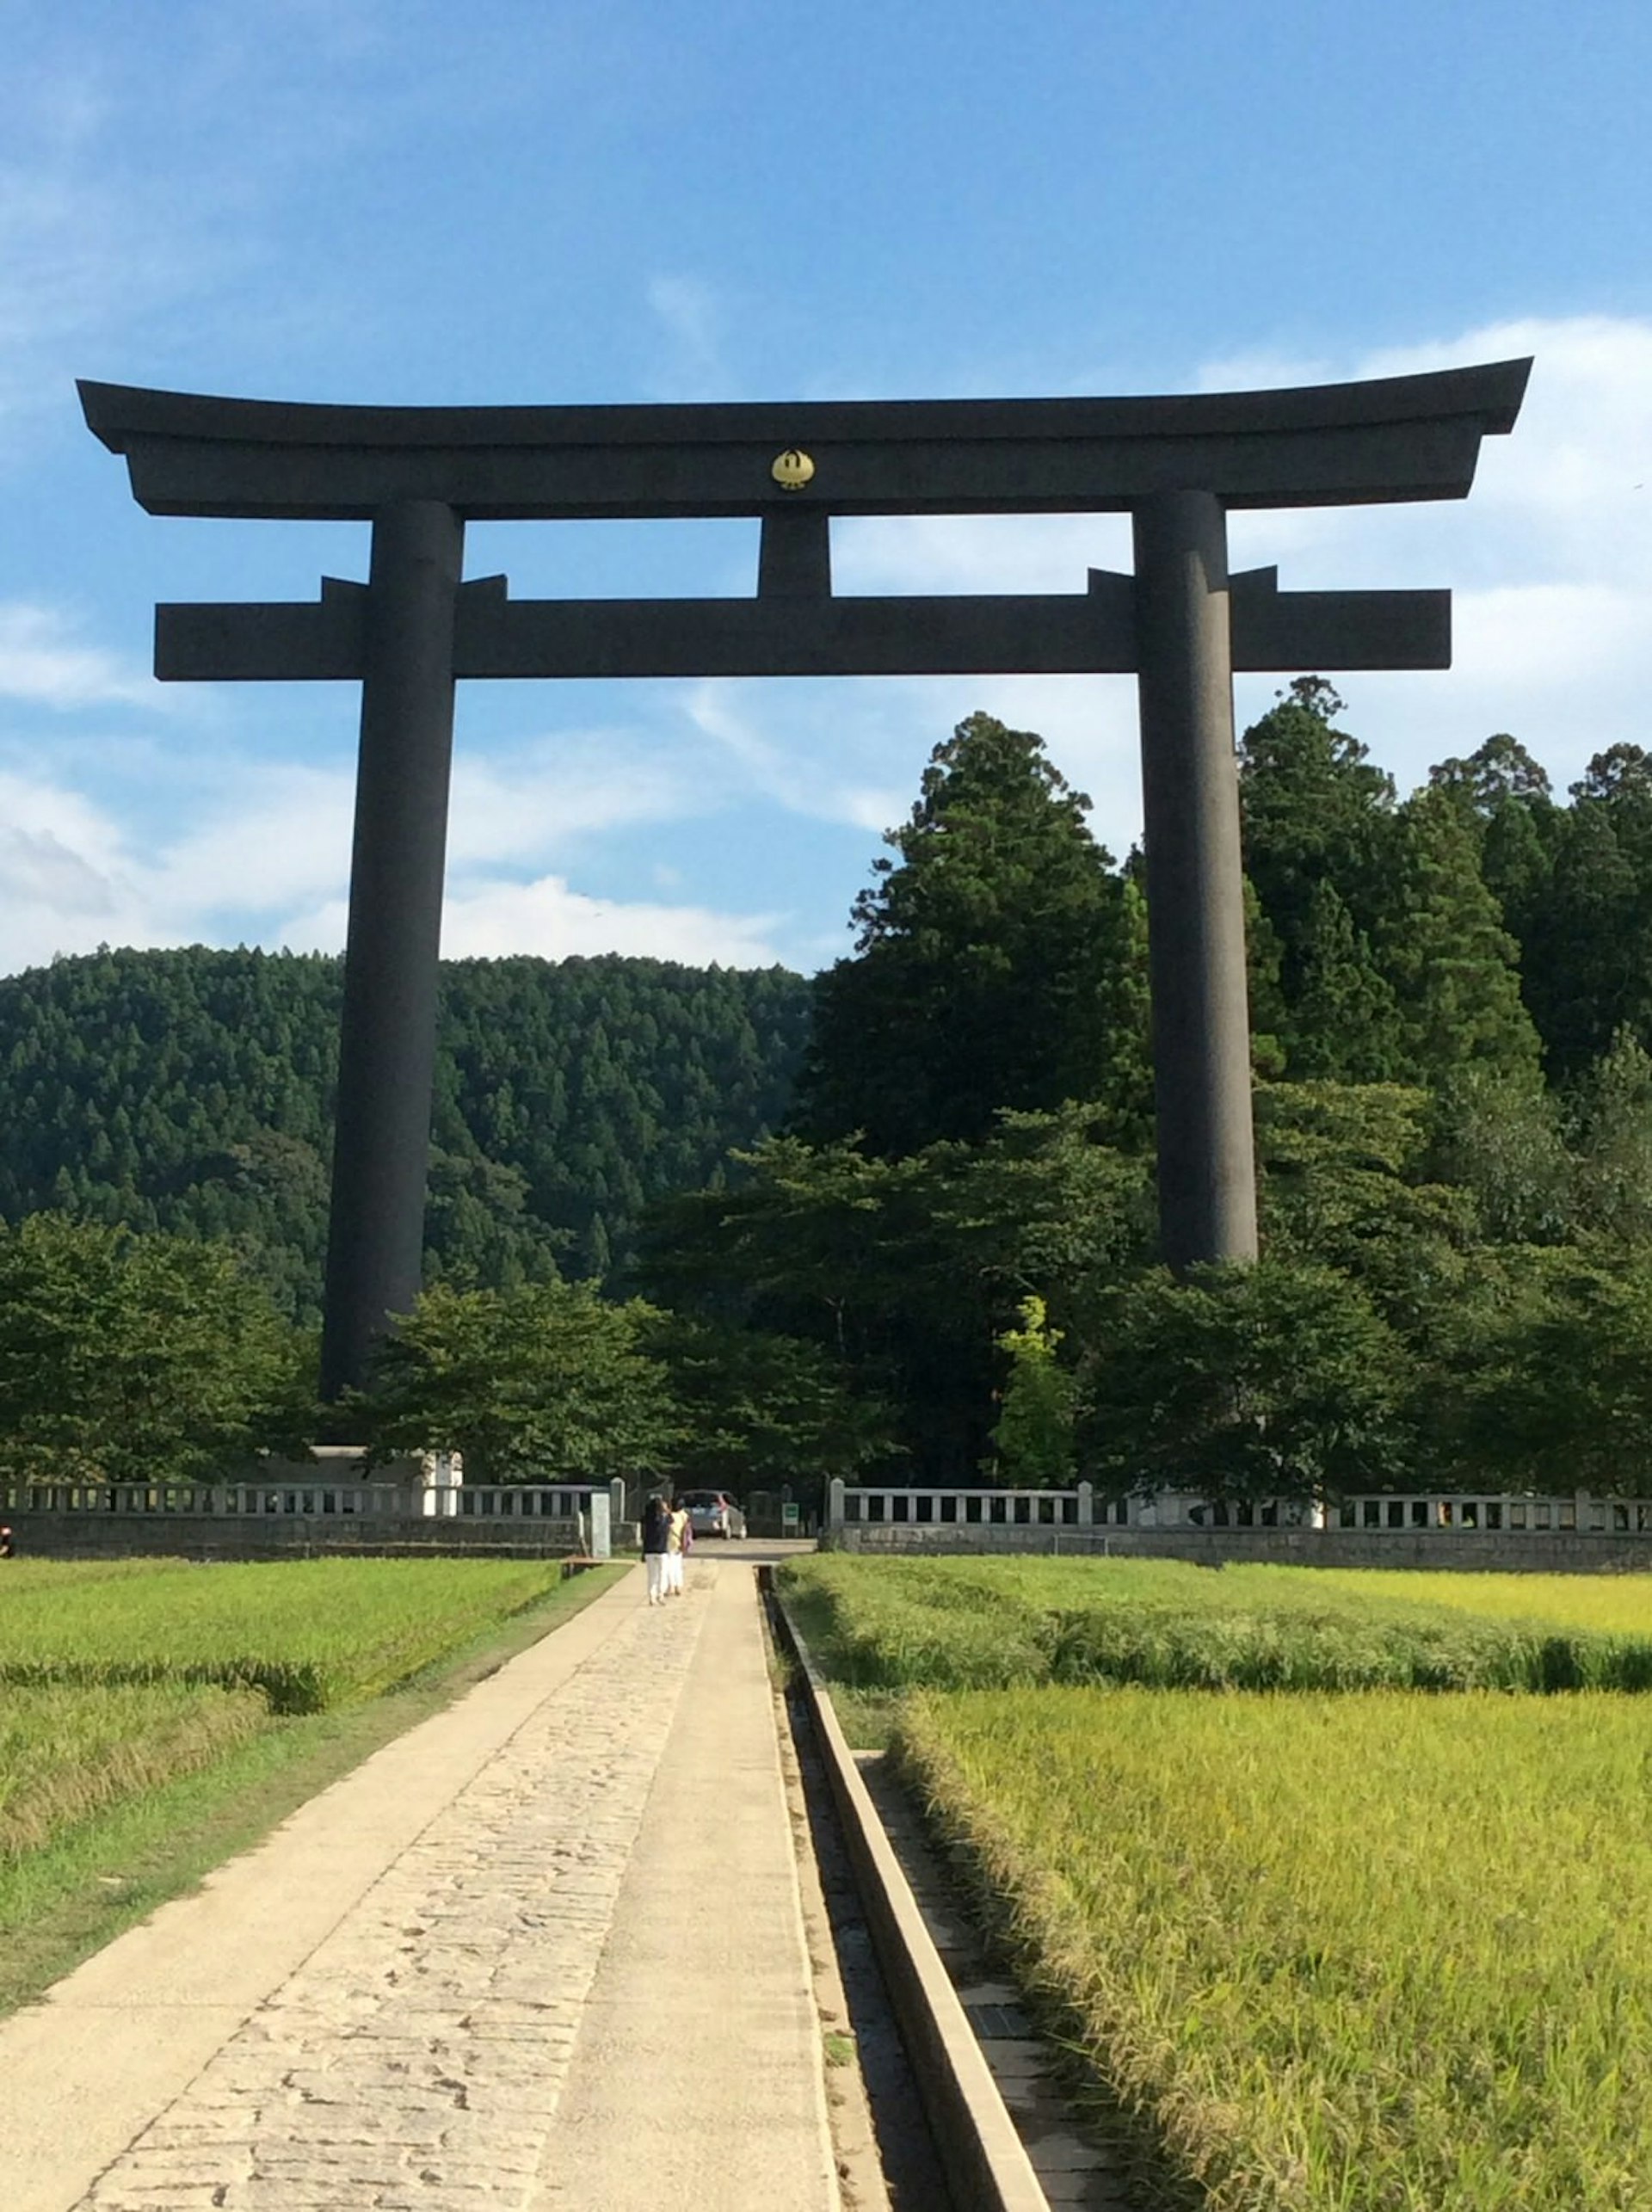 Japan's largest Shintō torii gate sits amid rice paddies in Hongū